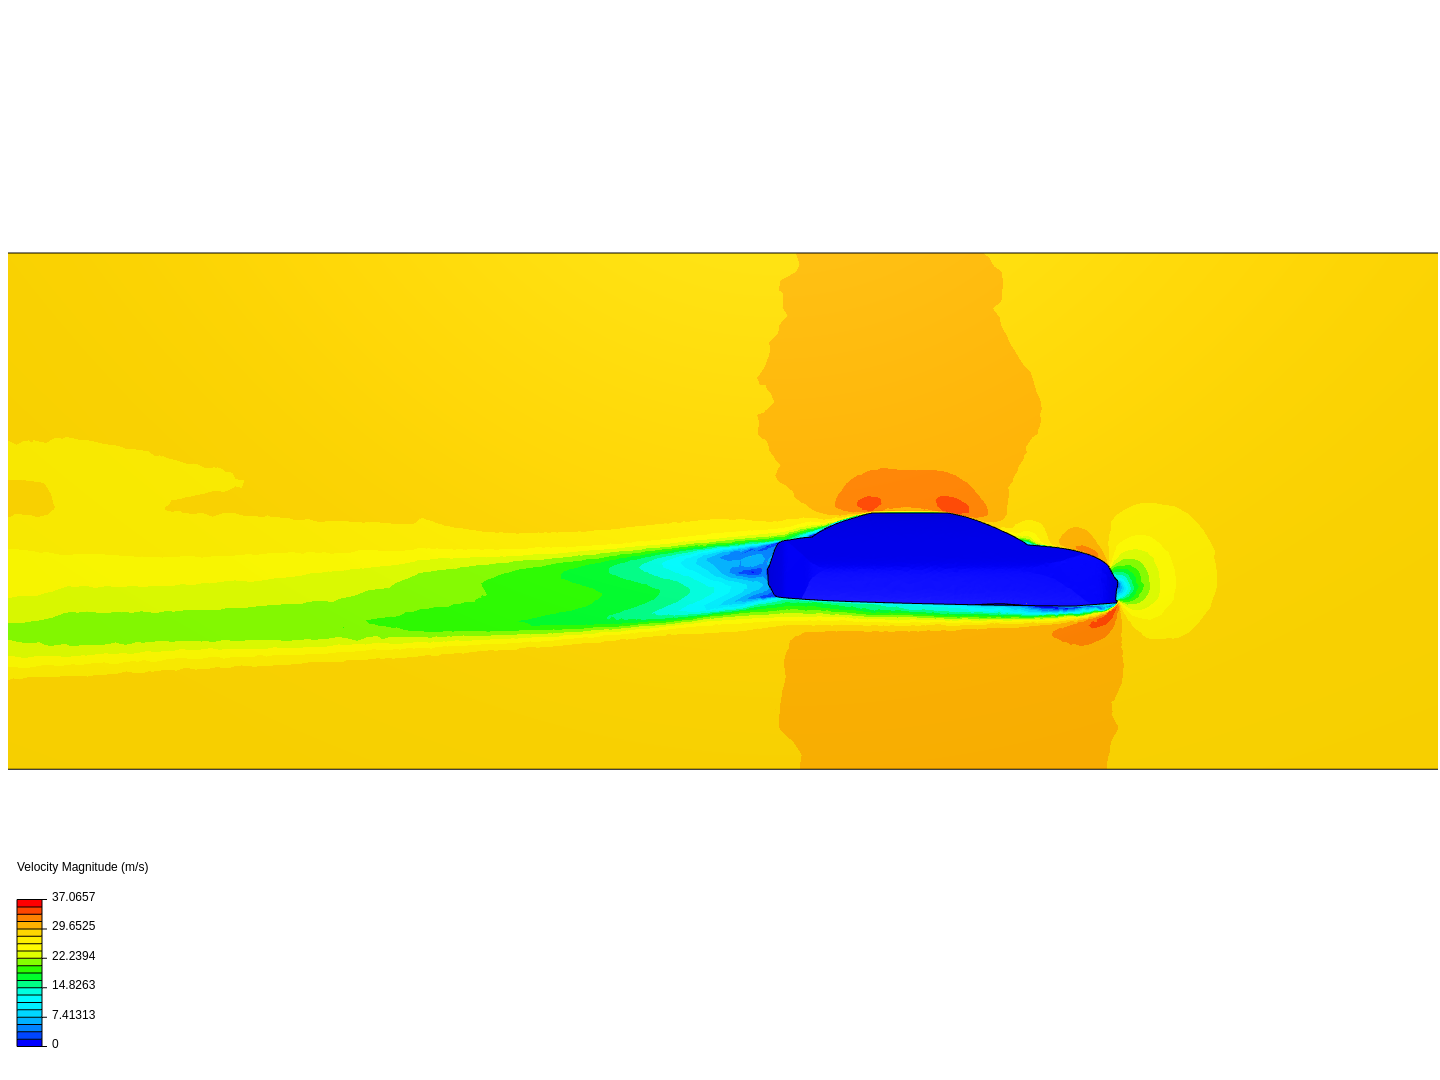 Normal Sedan - Compressible simulation image